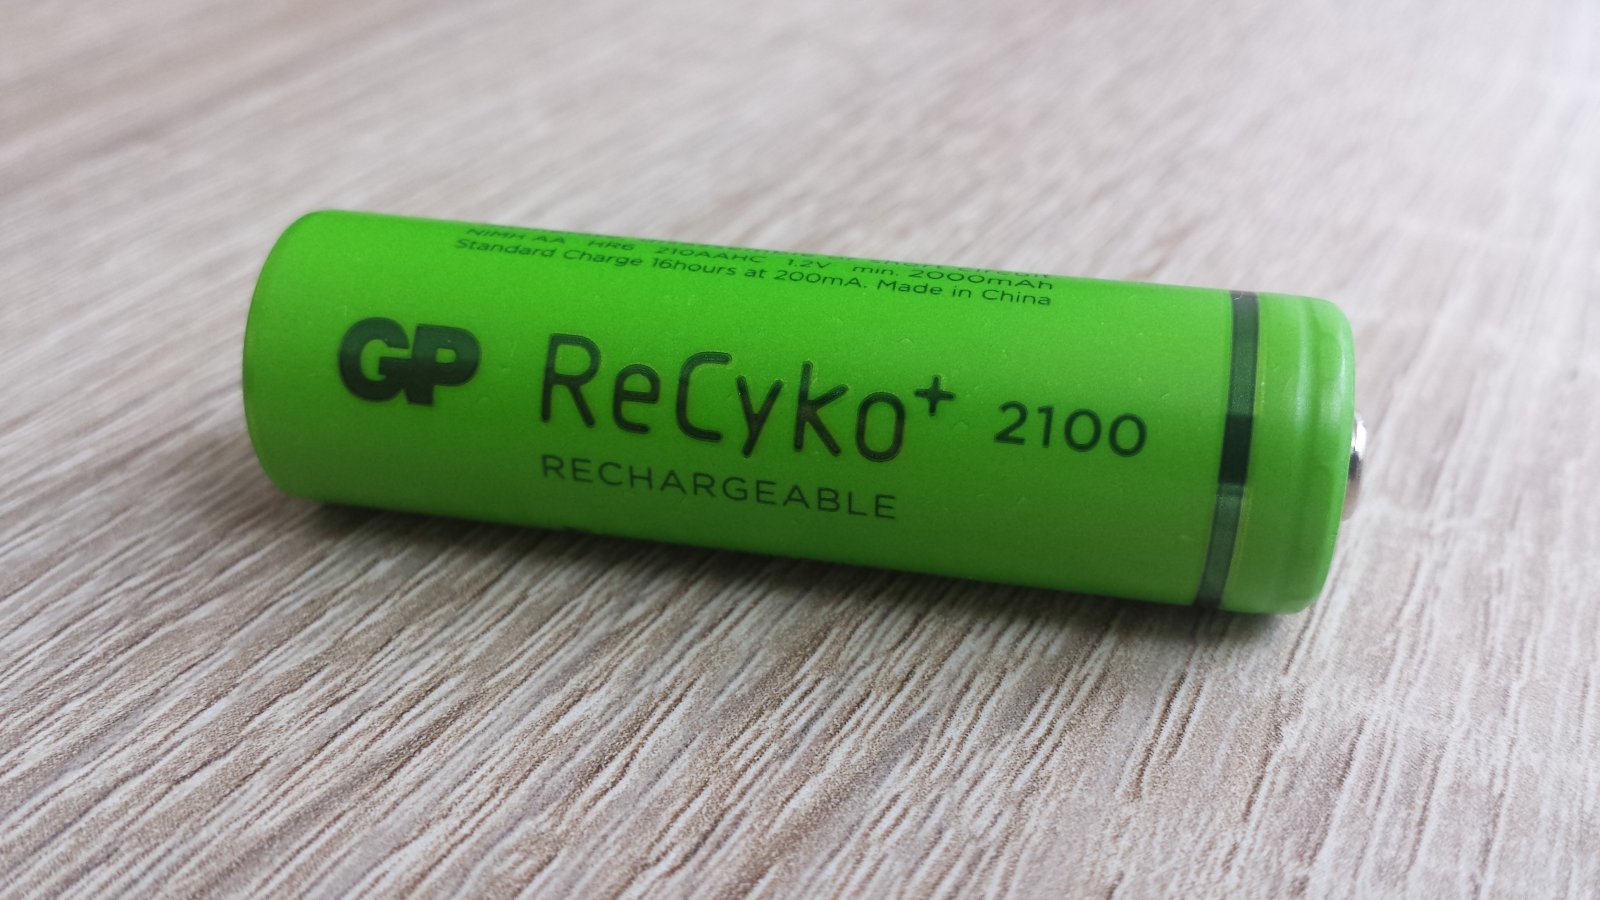 GP ReCyko+ 2100